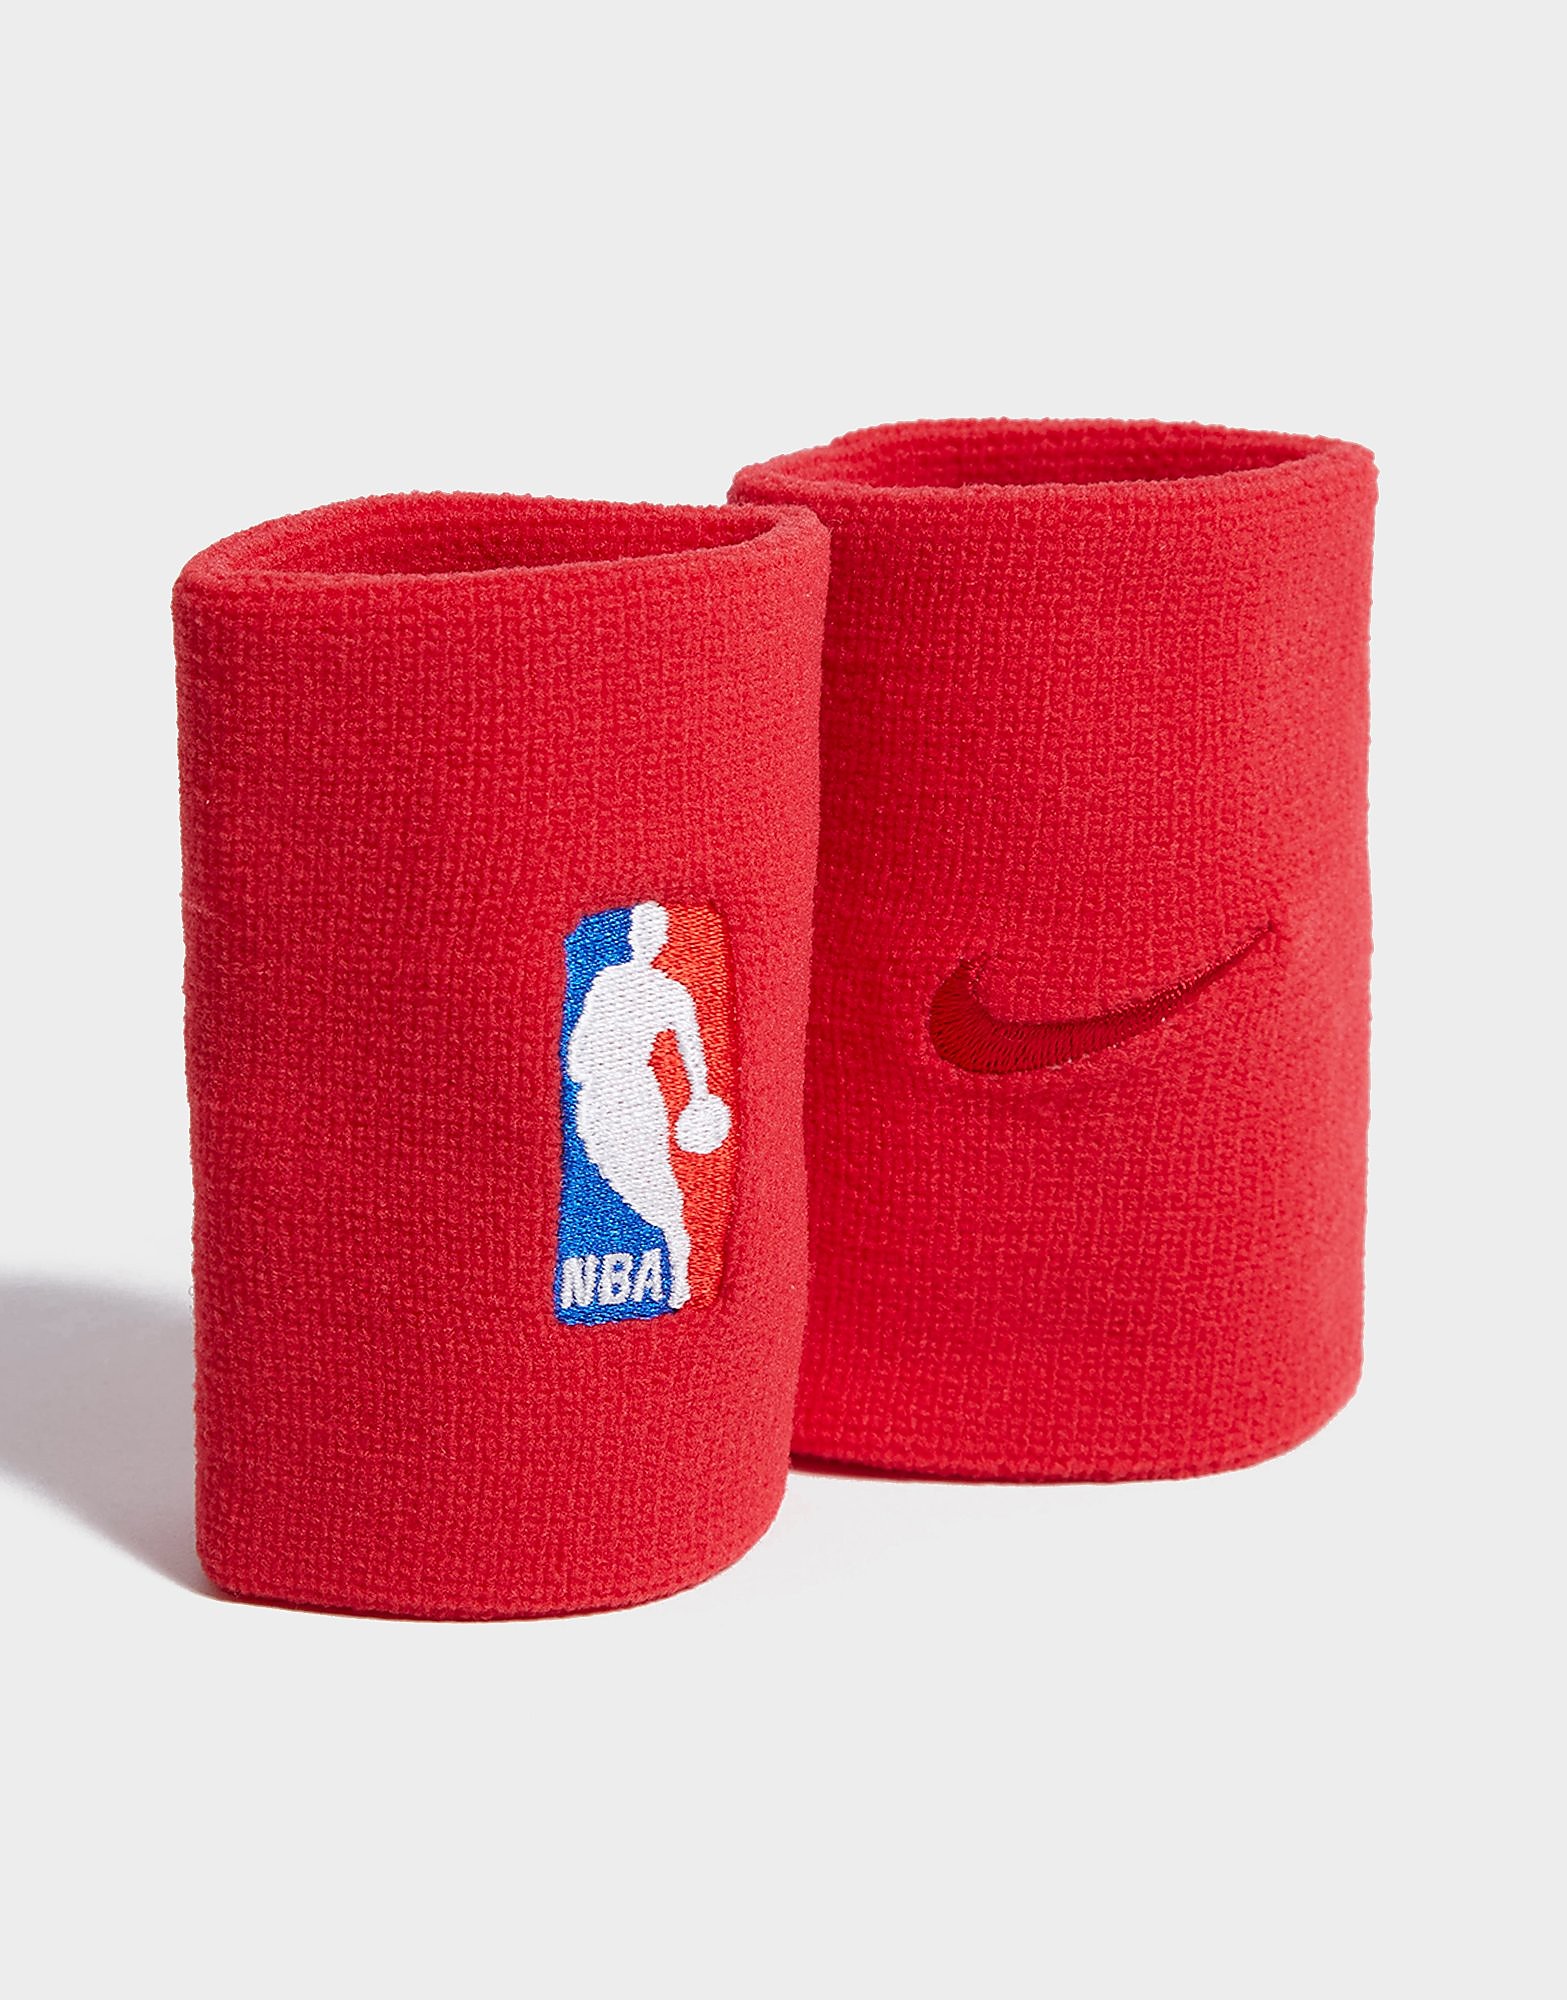 Nike nba wrist bands - mens, punainen, nike